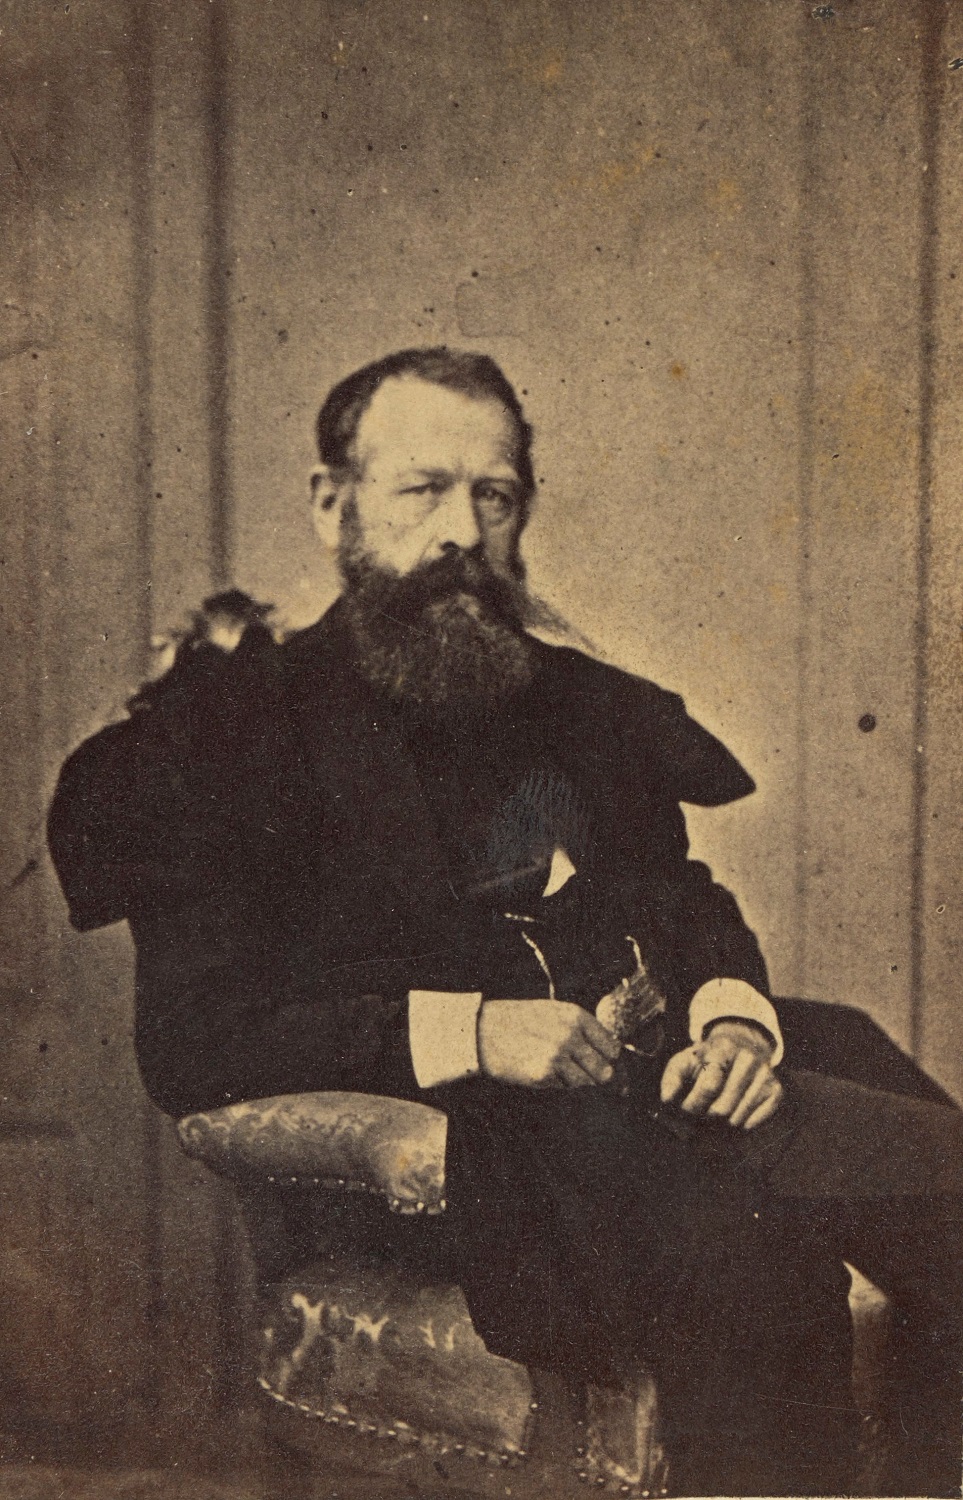 Franciszek Smolka (photo from 1860s)